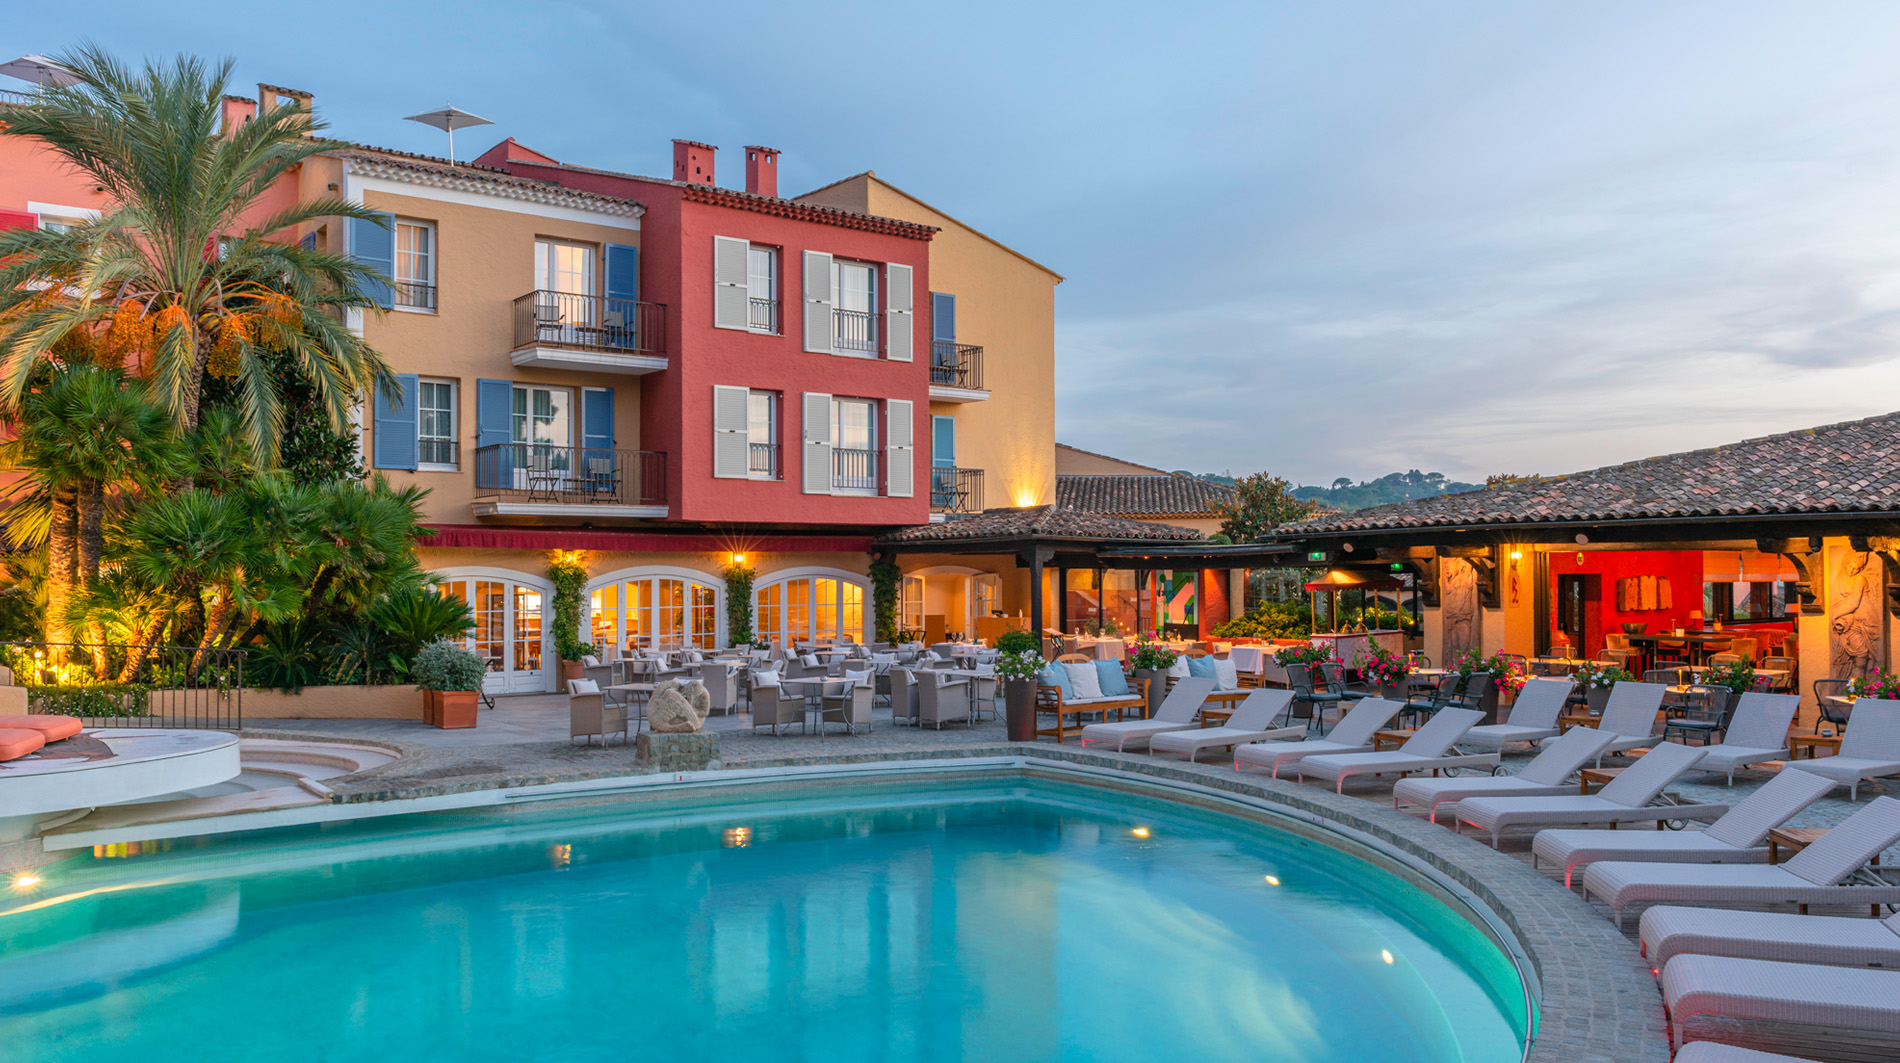 Hotel Byblos Saint-Tropez - French Riviera Hotels - French Riviera ...